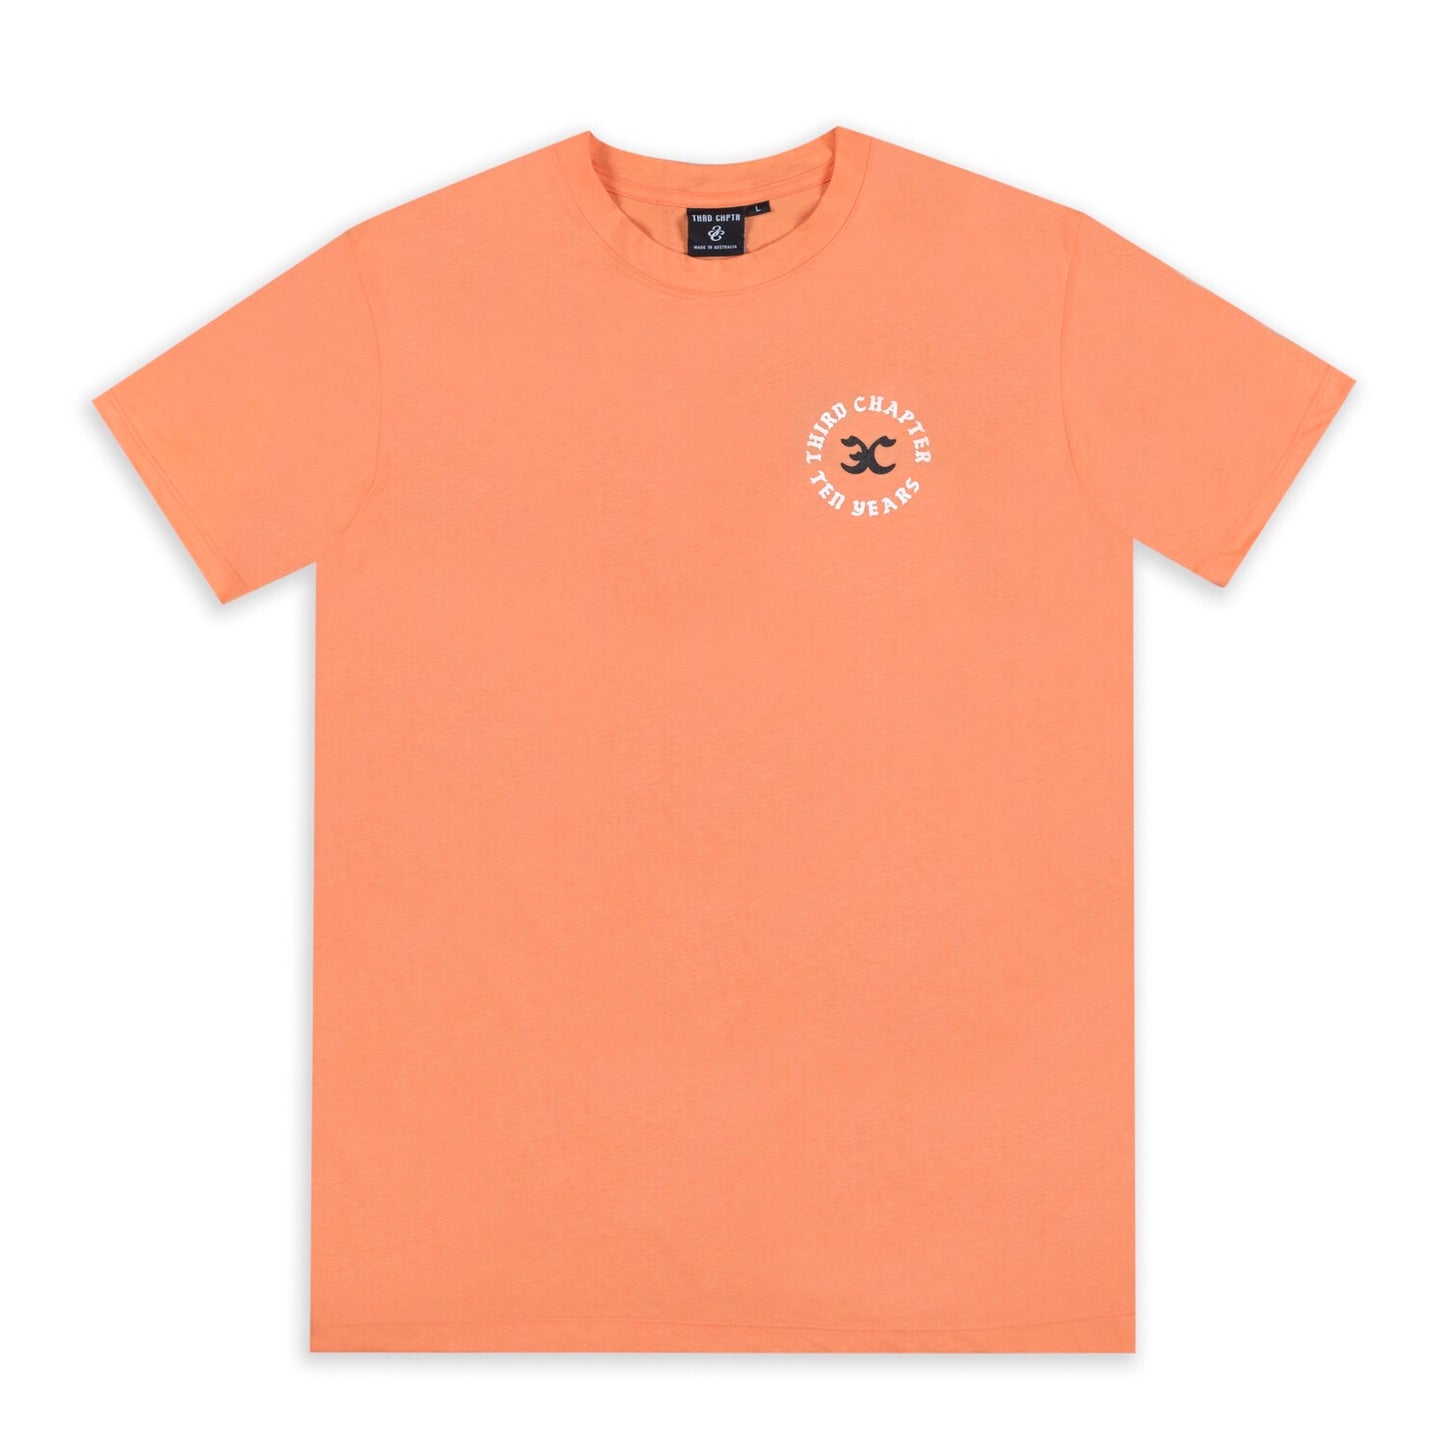 X T-Shirt Orange